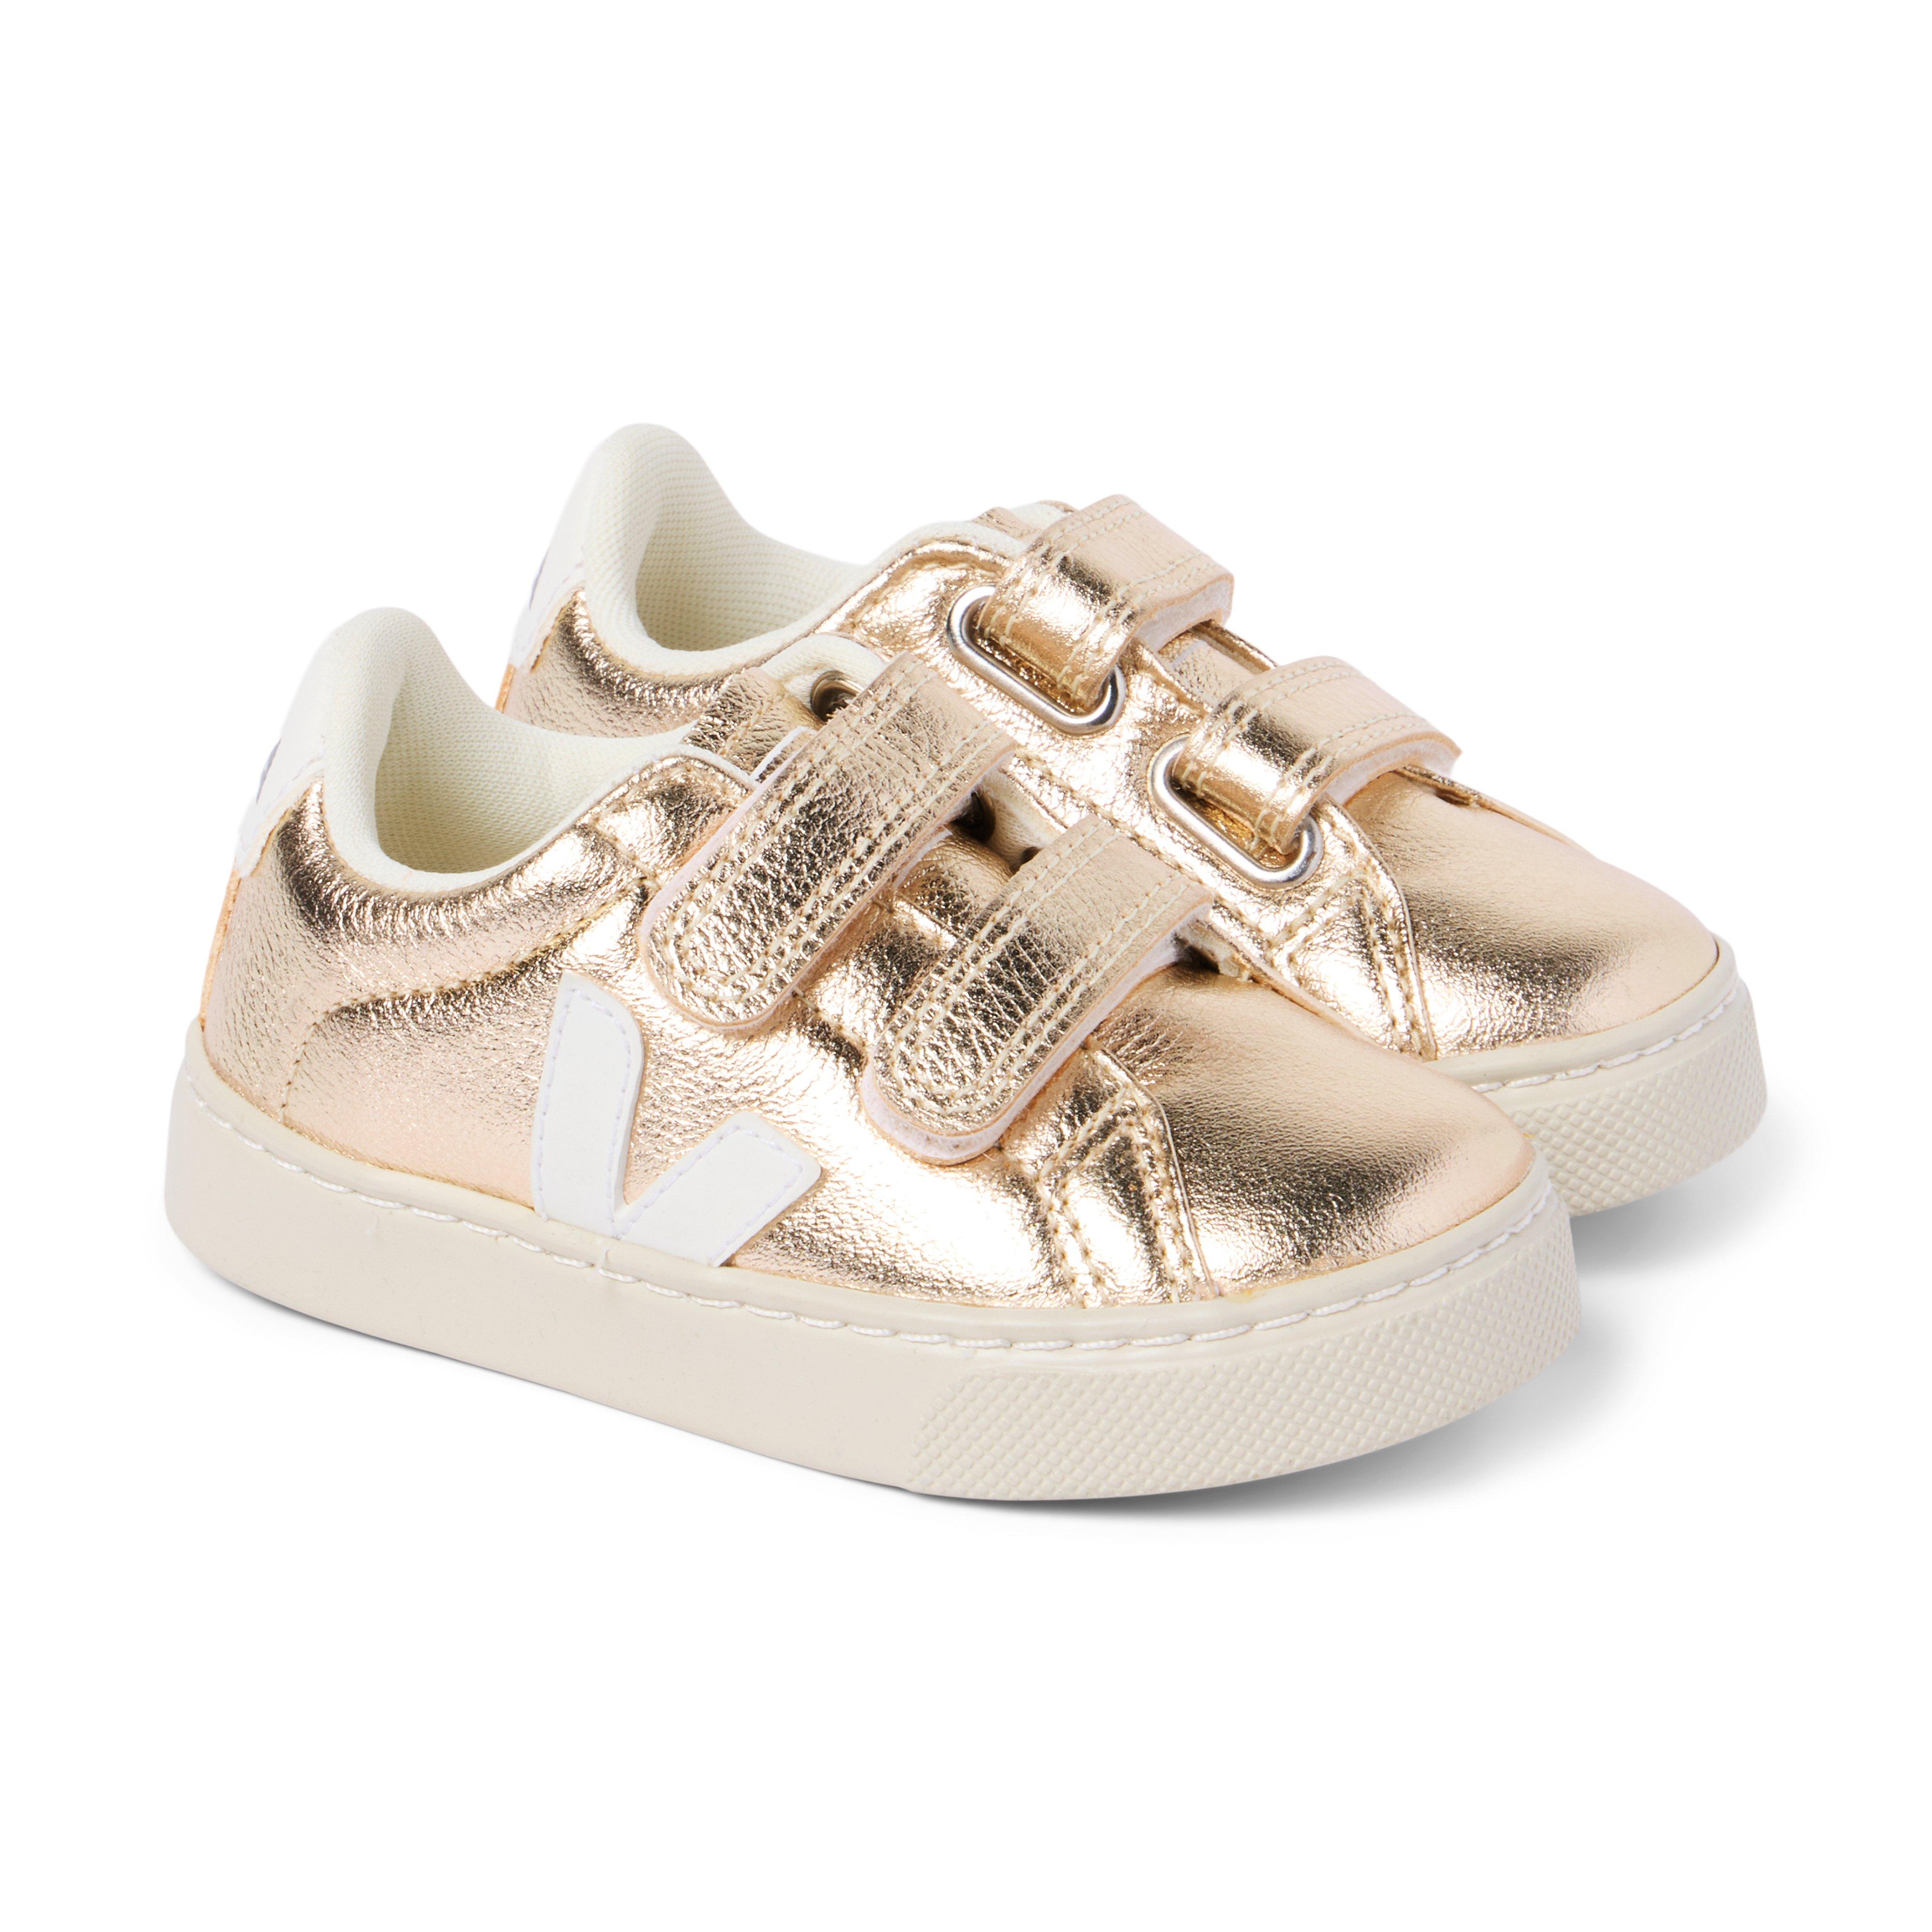 Toddler Veja Esplar Gold Sneaker